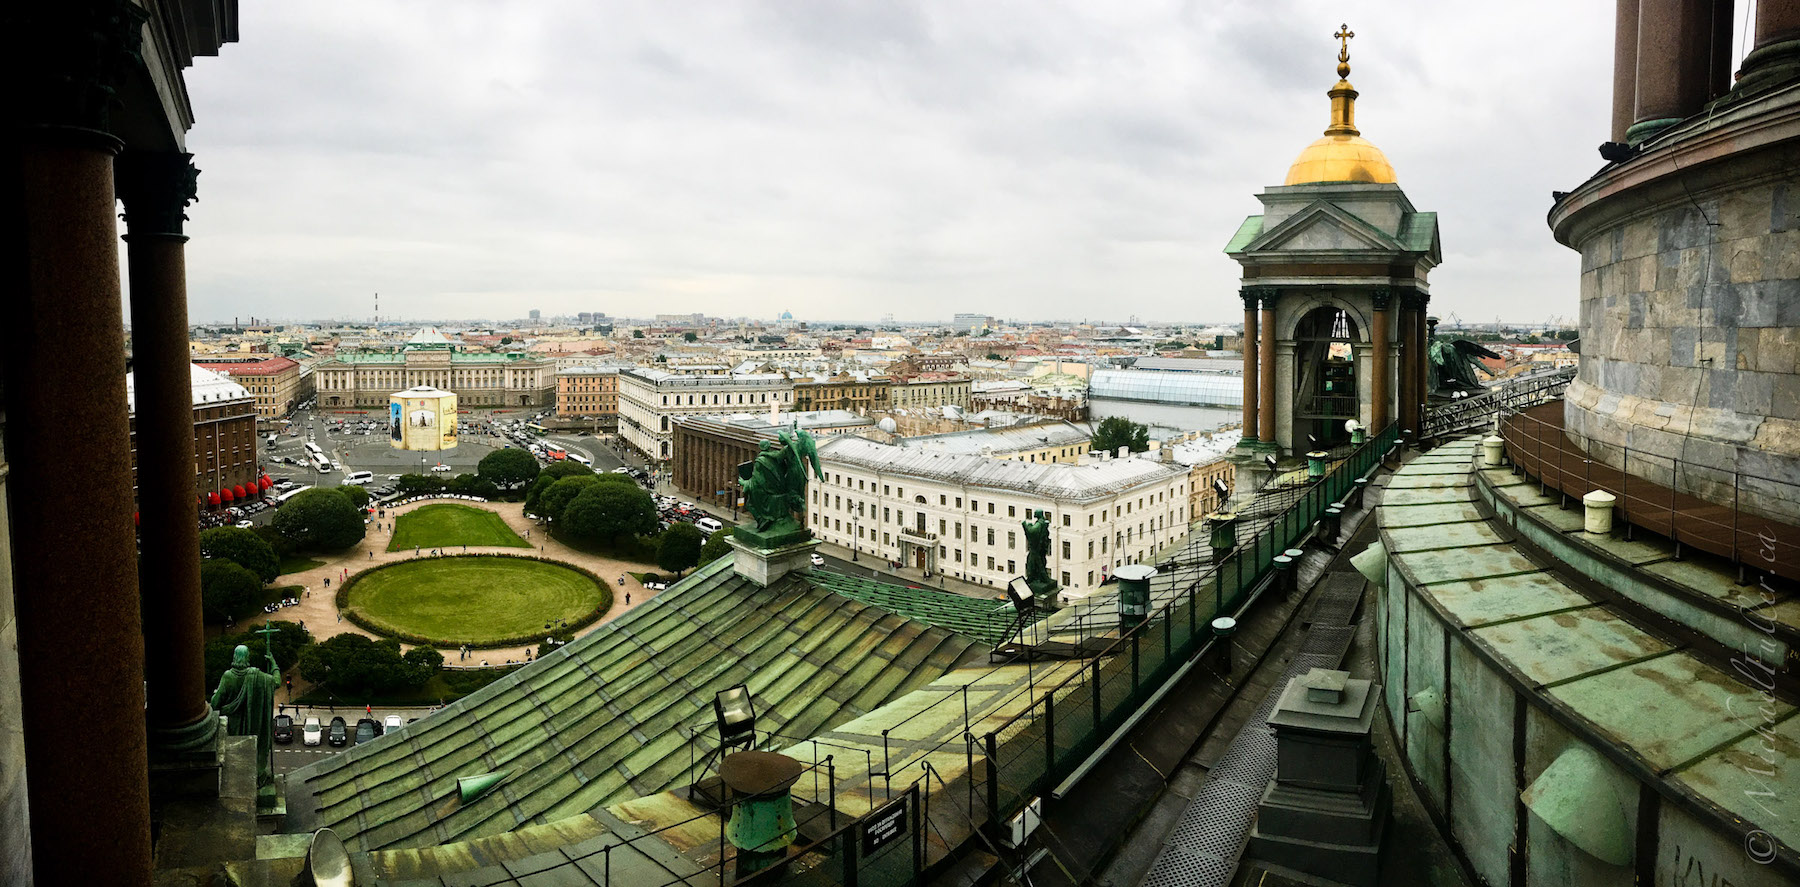 The highest point in Saint Petersburg